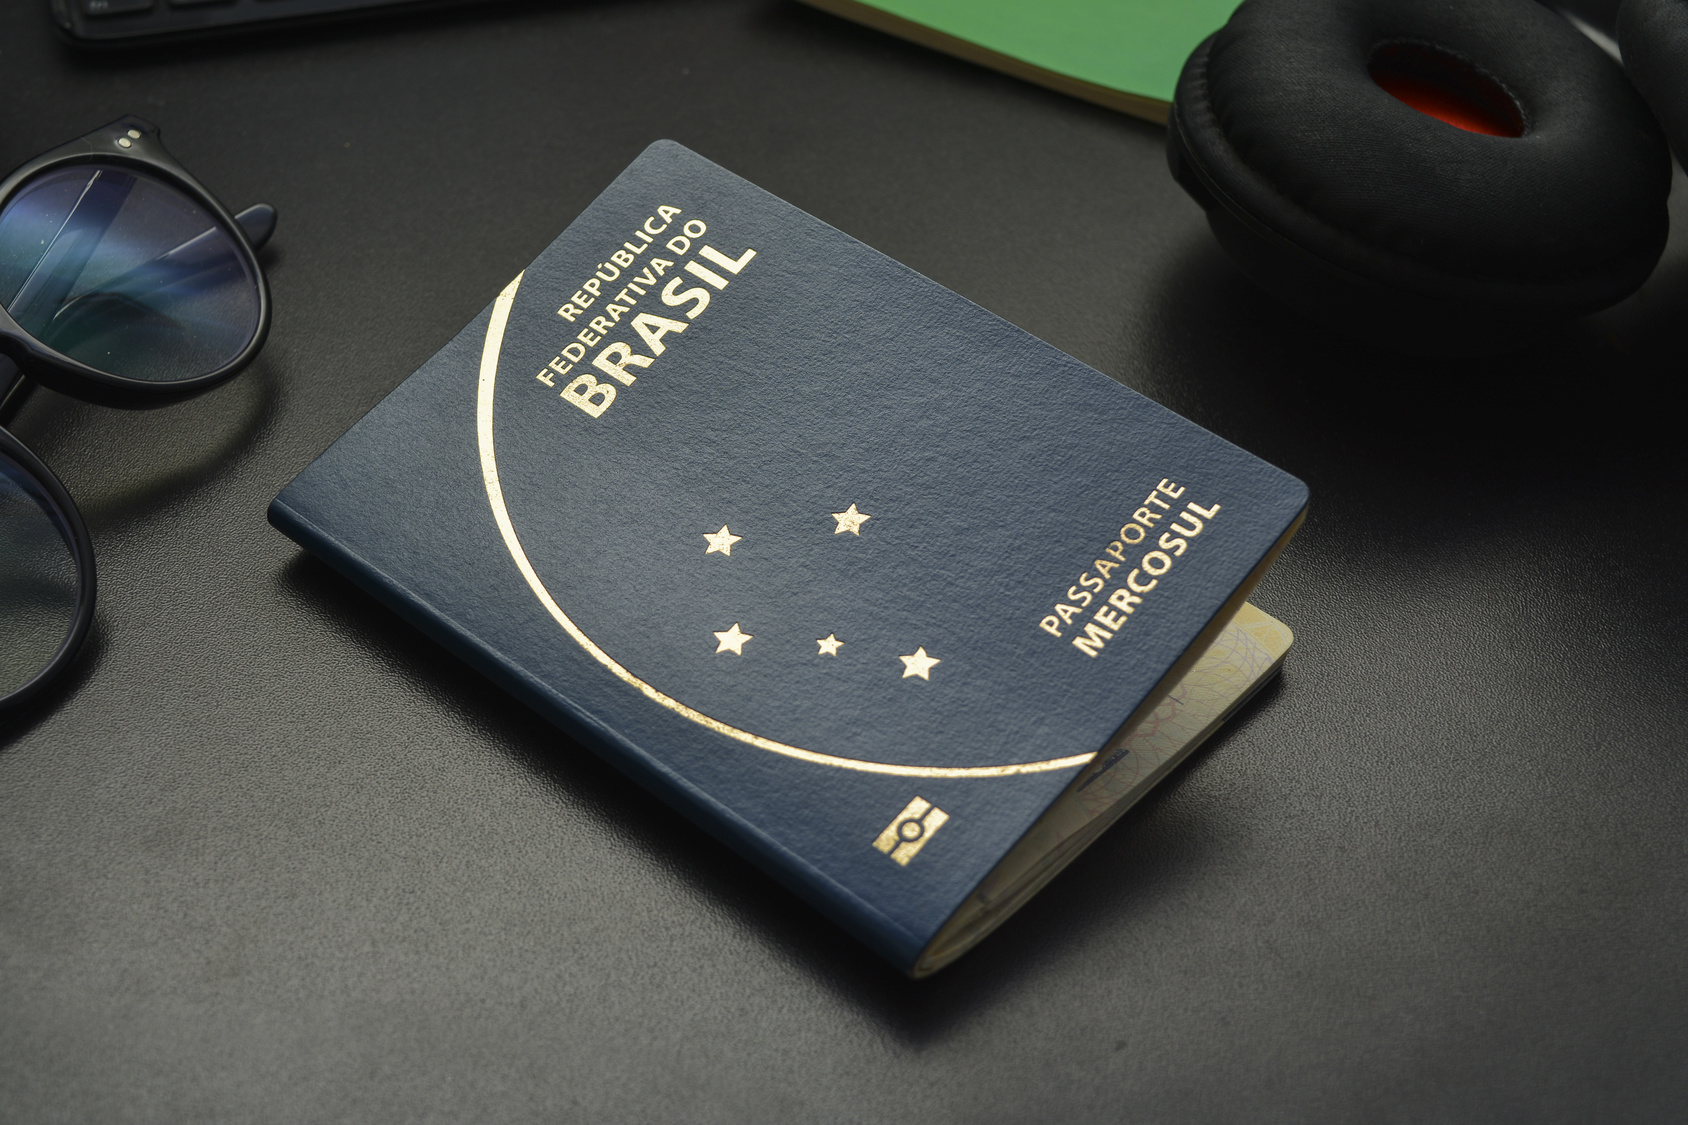 Como renovar o passaporte brasileiro